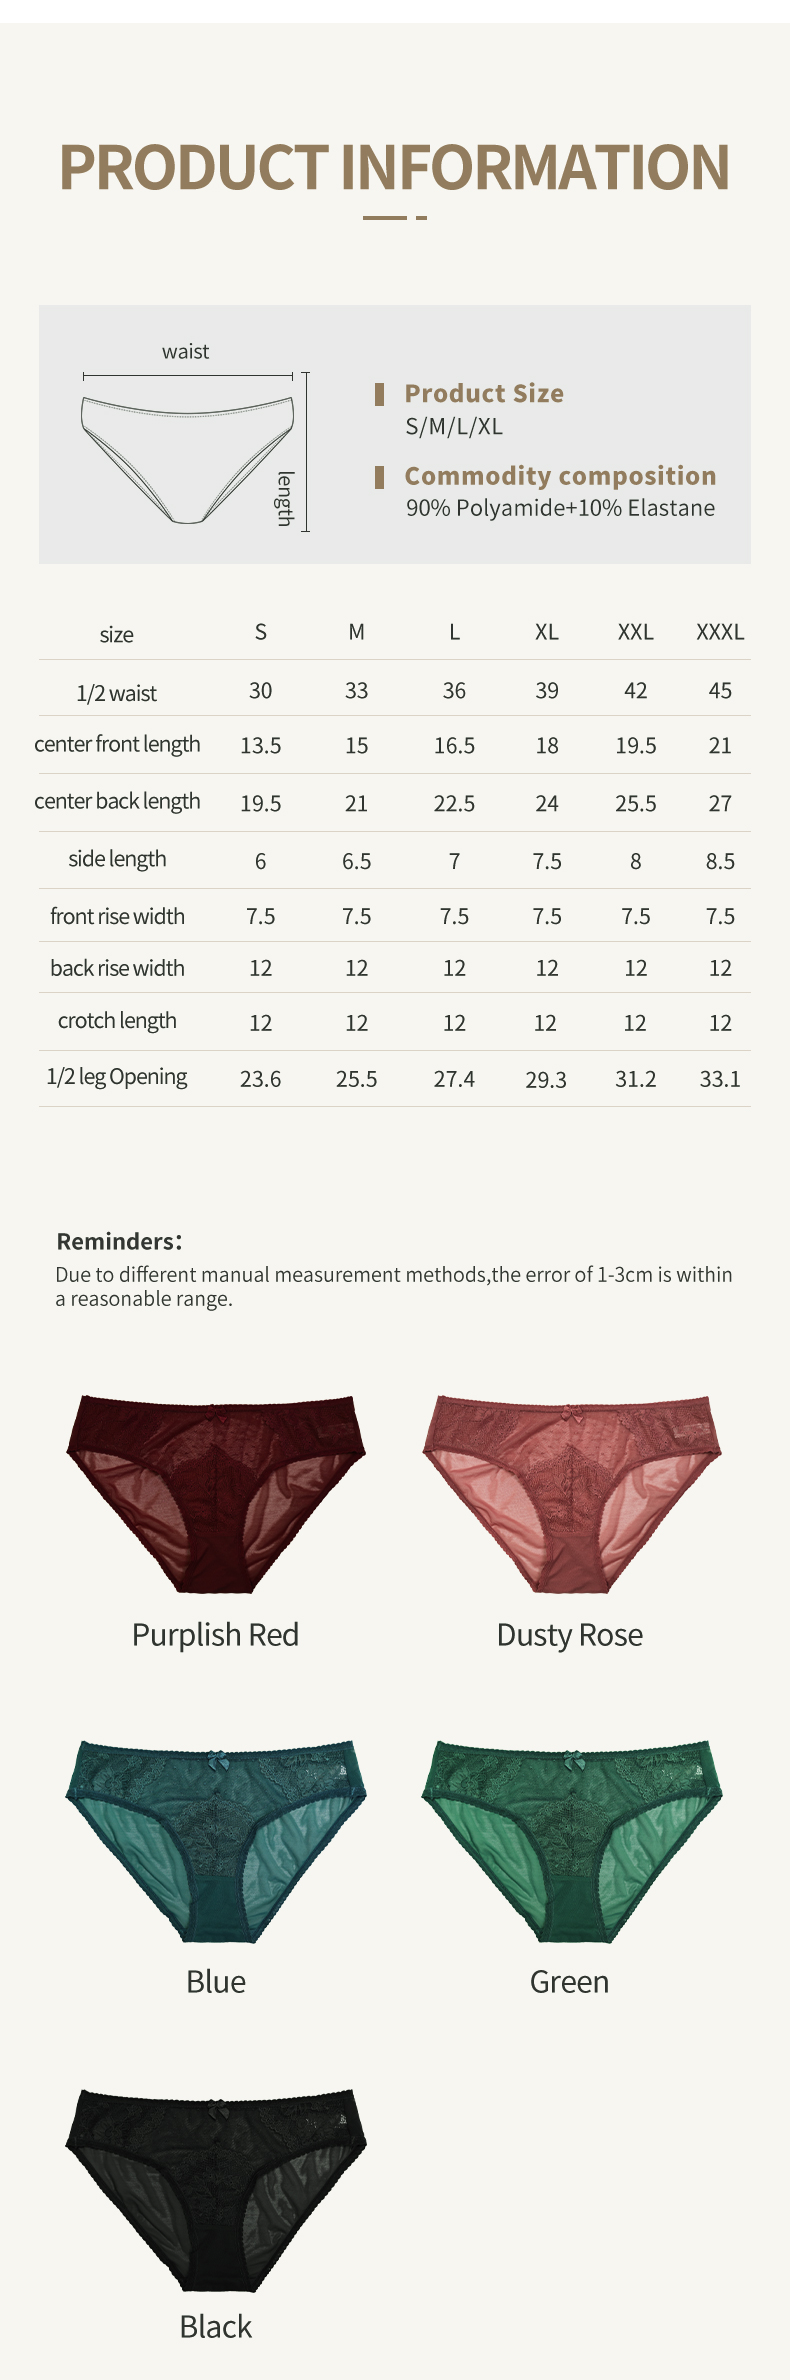 women's undergarments